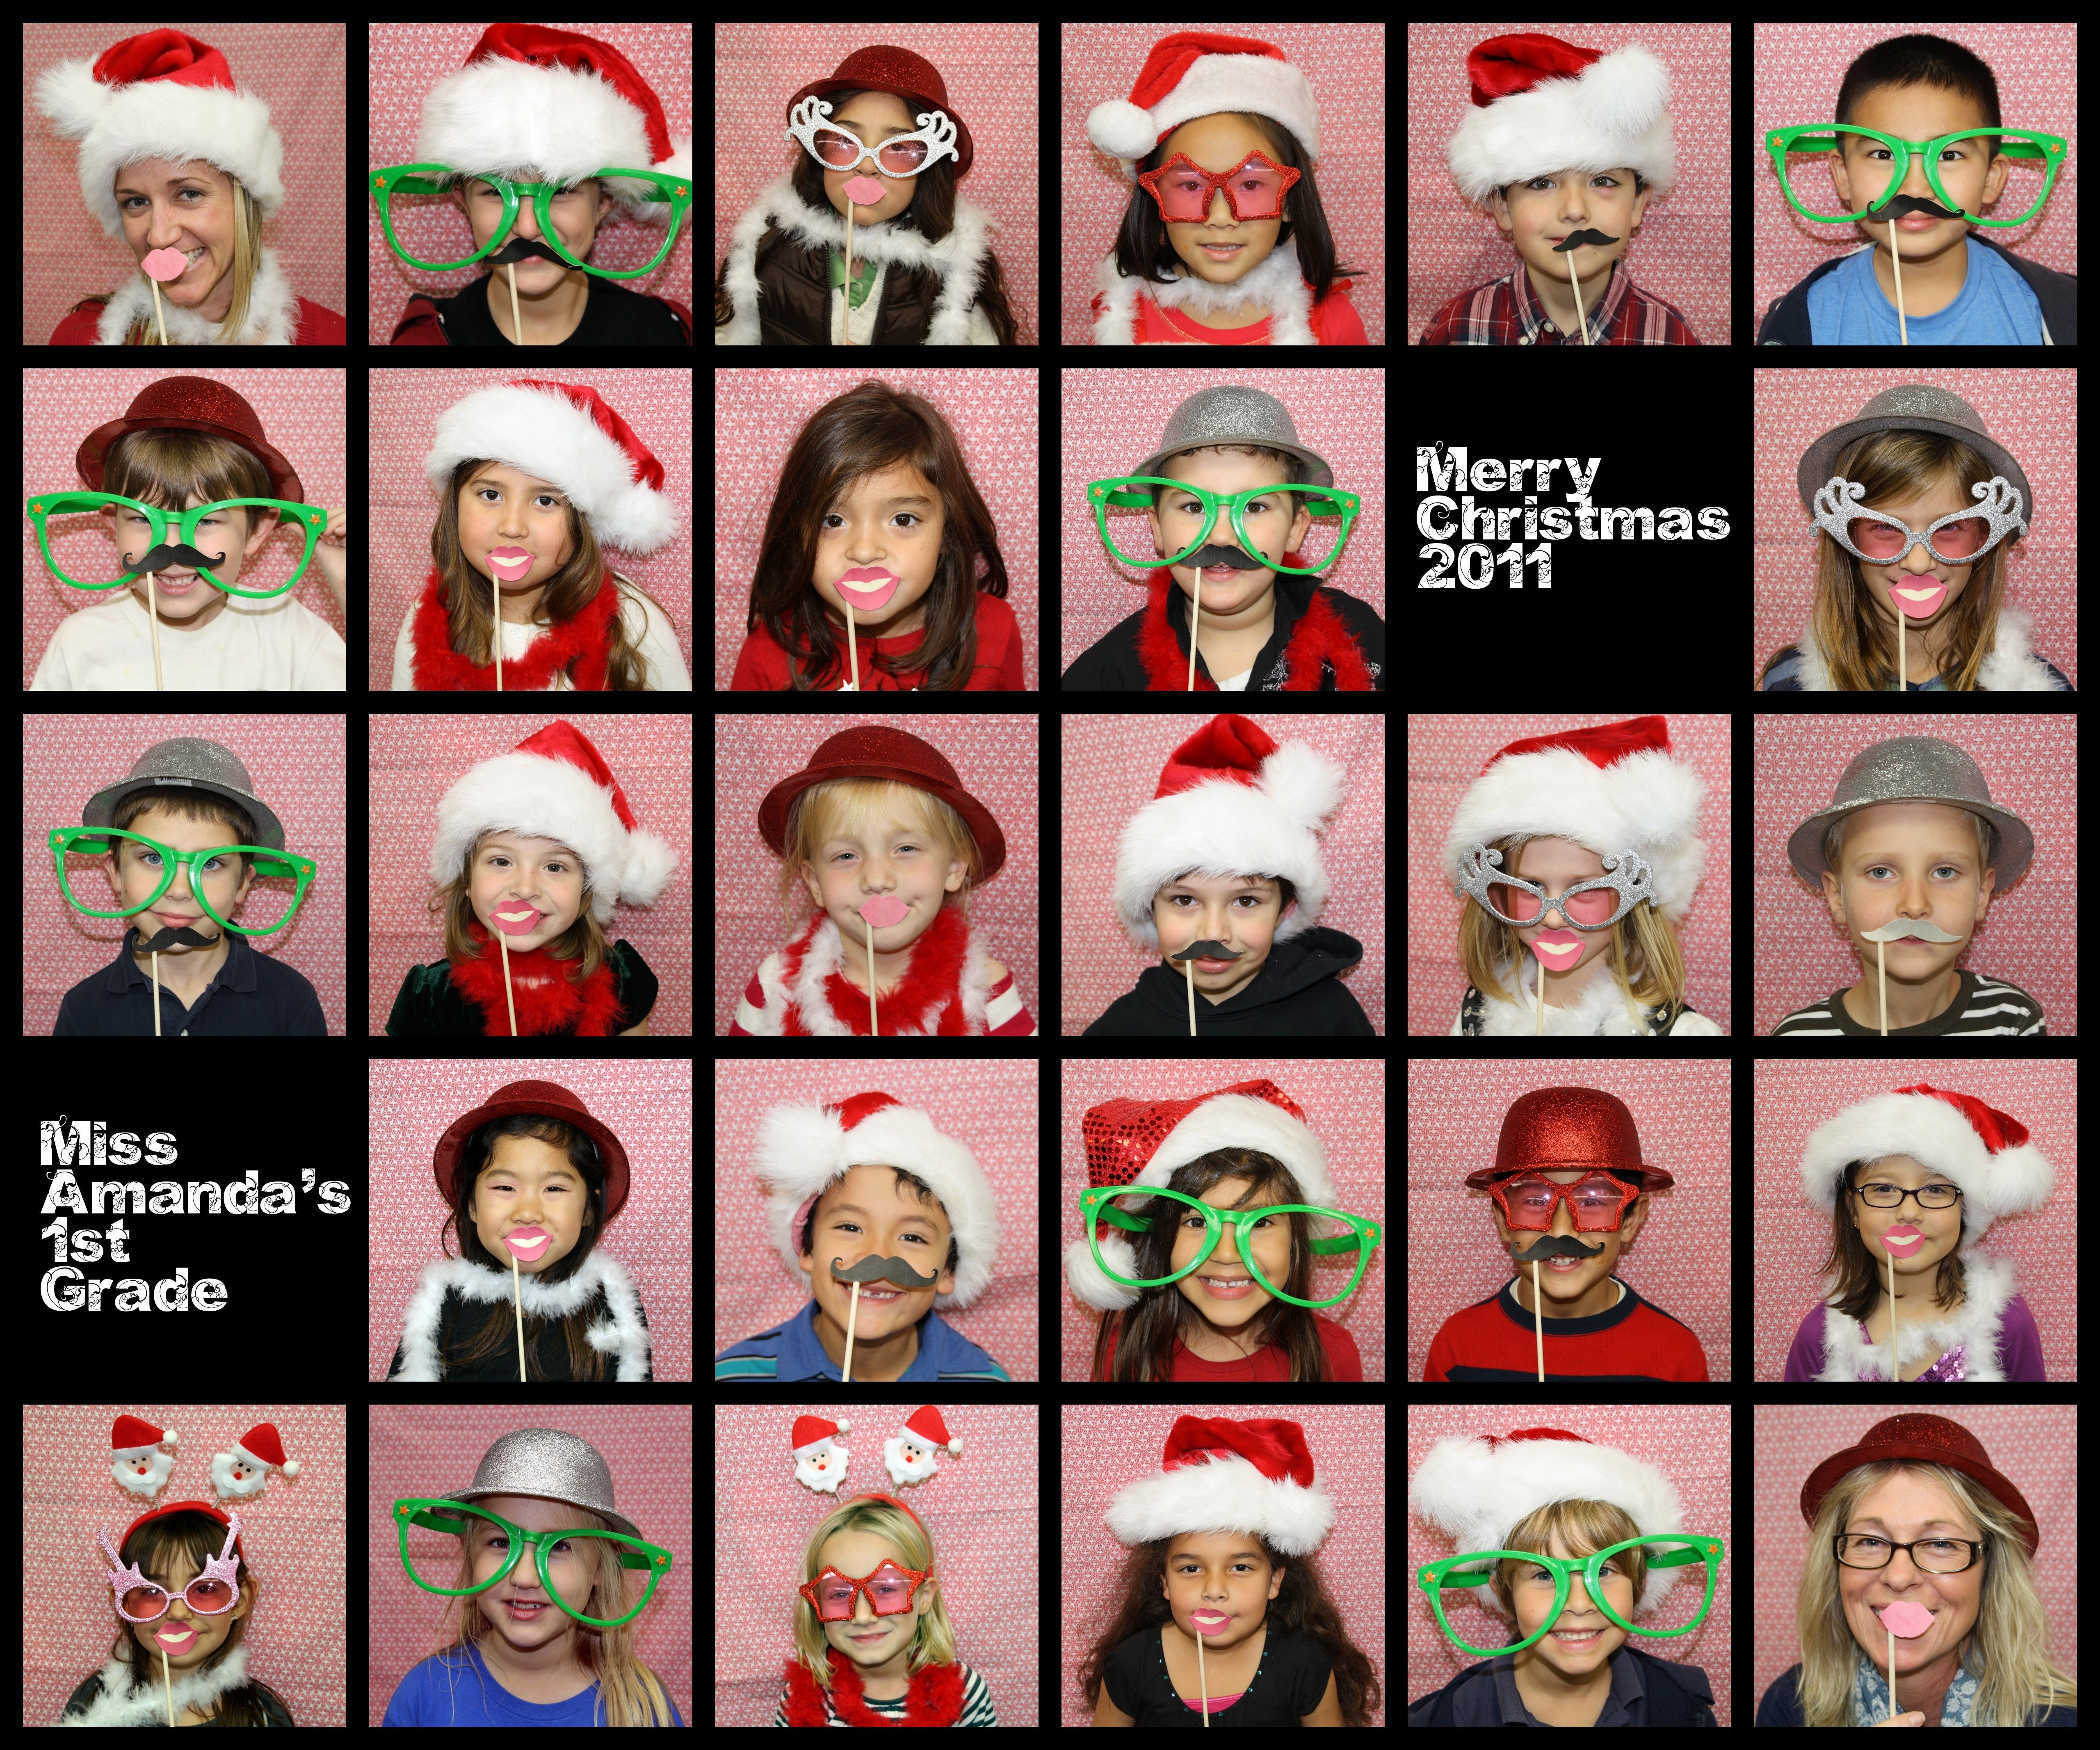 2Nd Grade Christmas Party Ideas
 1st grade class christmas party photo booth photobooth